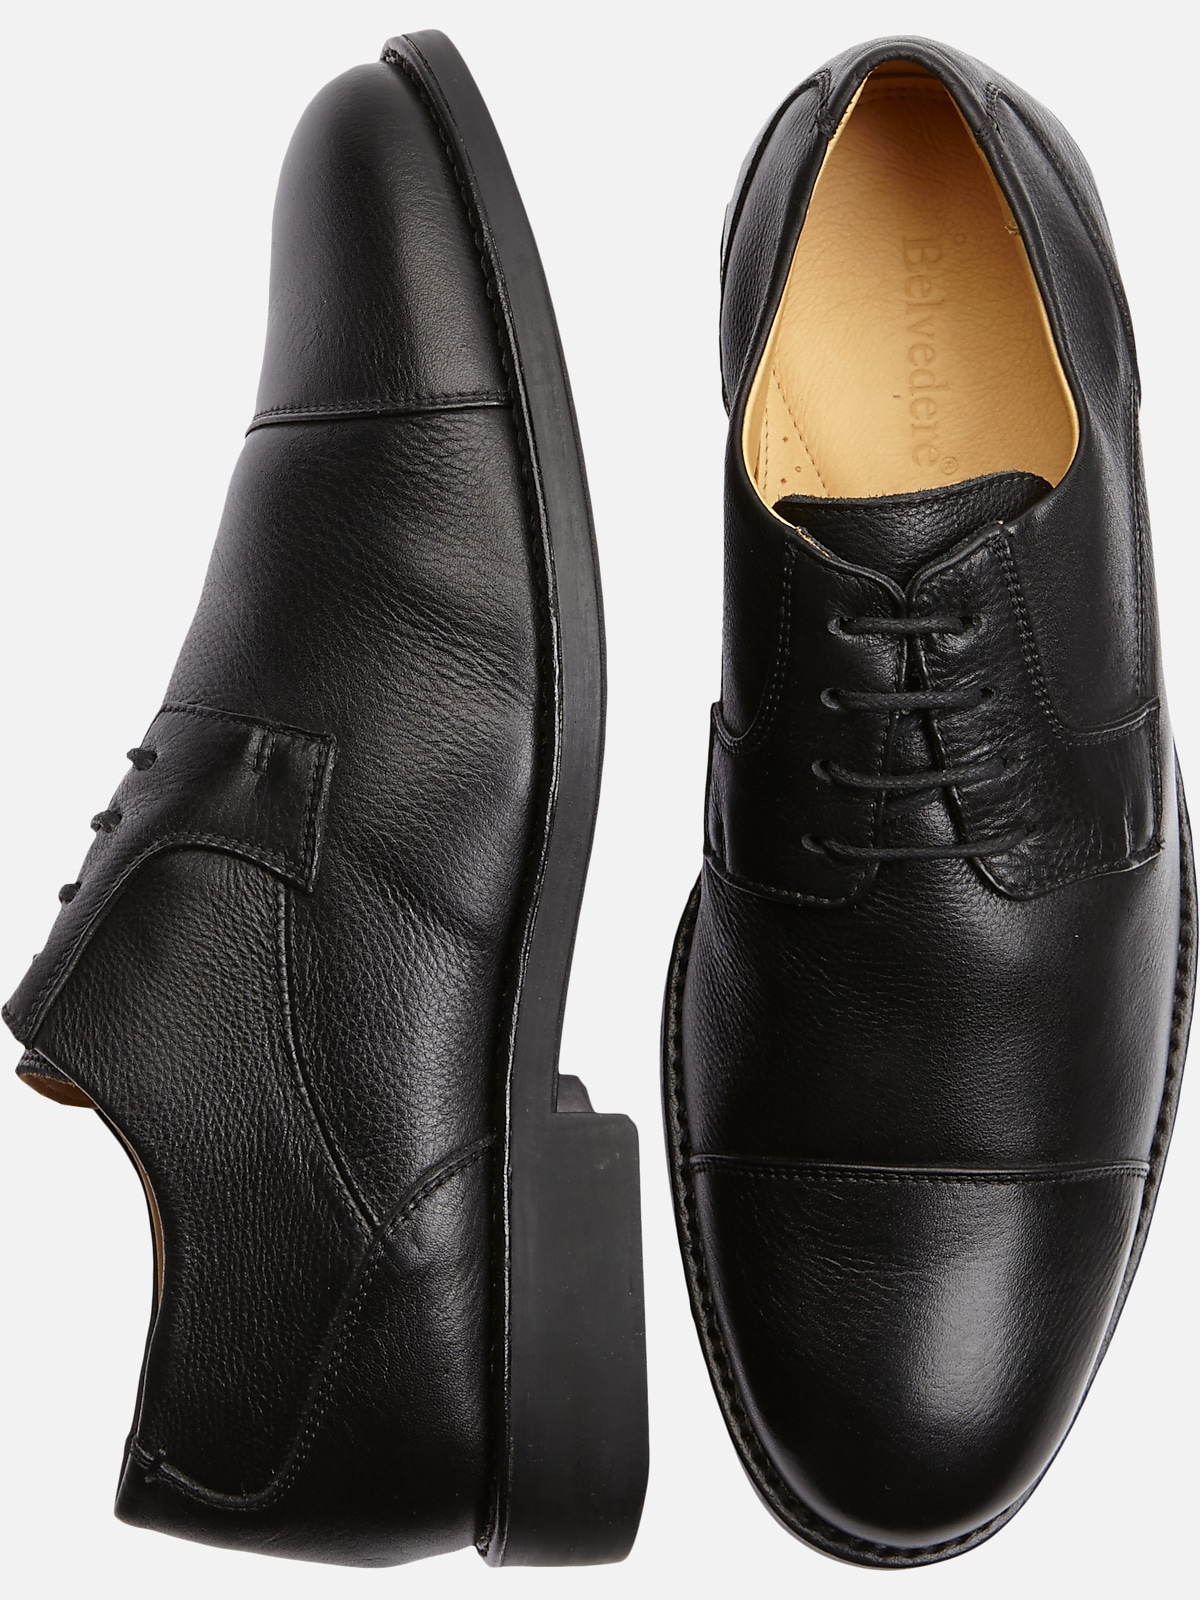 Belvedere Duke Cap Toe Shoes | All Clearance $39.99| Men's Wearhouse